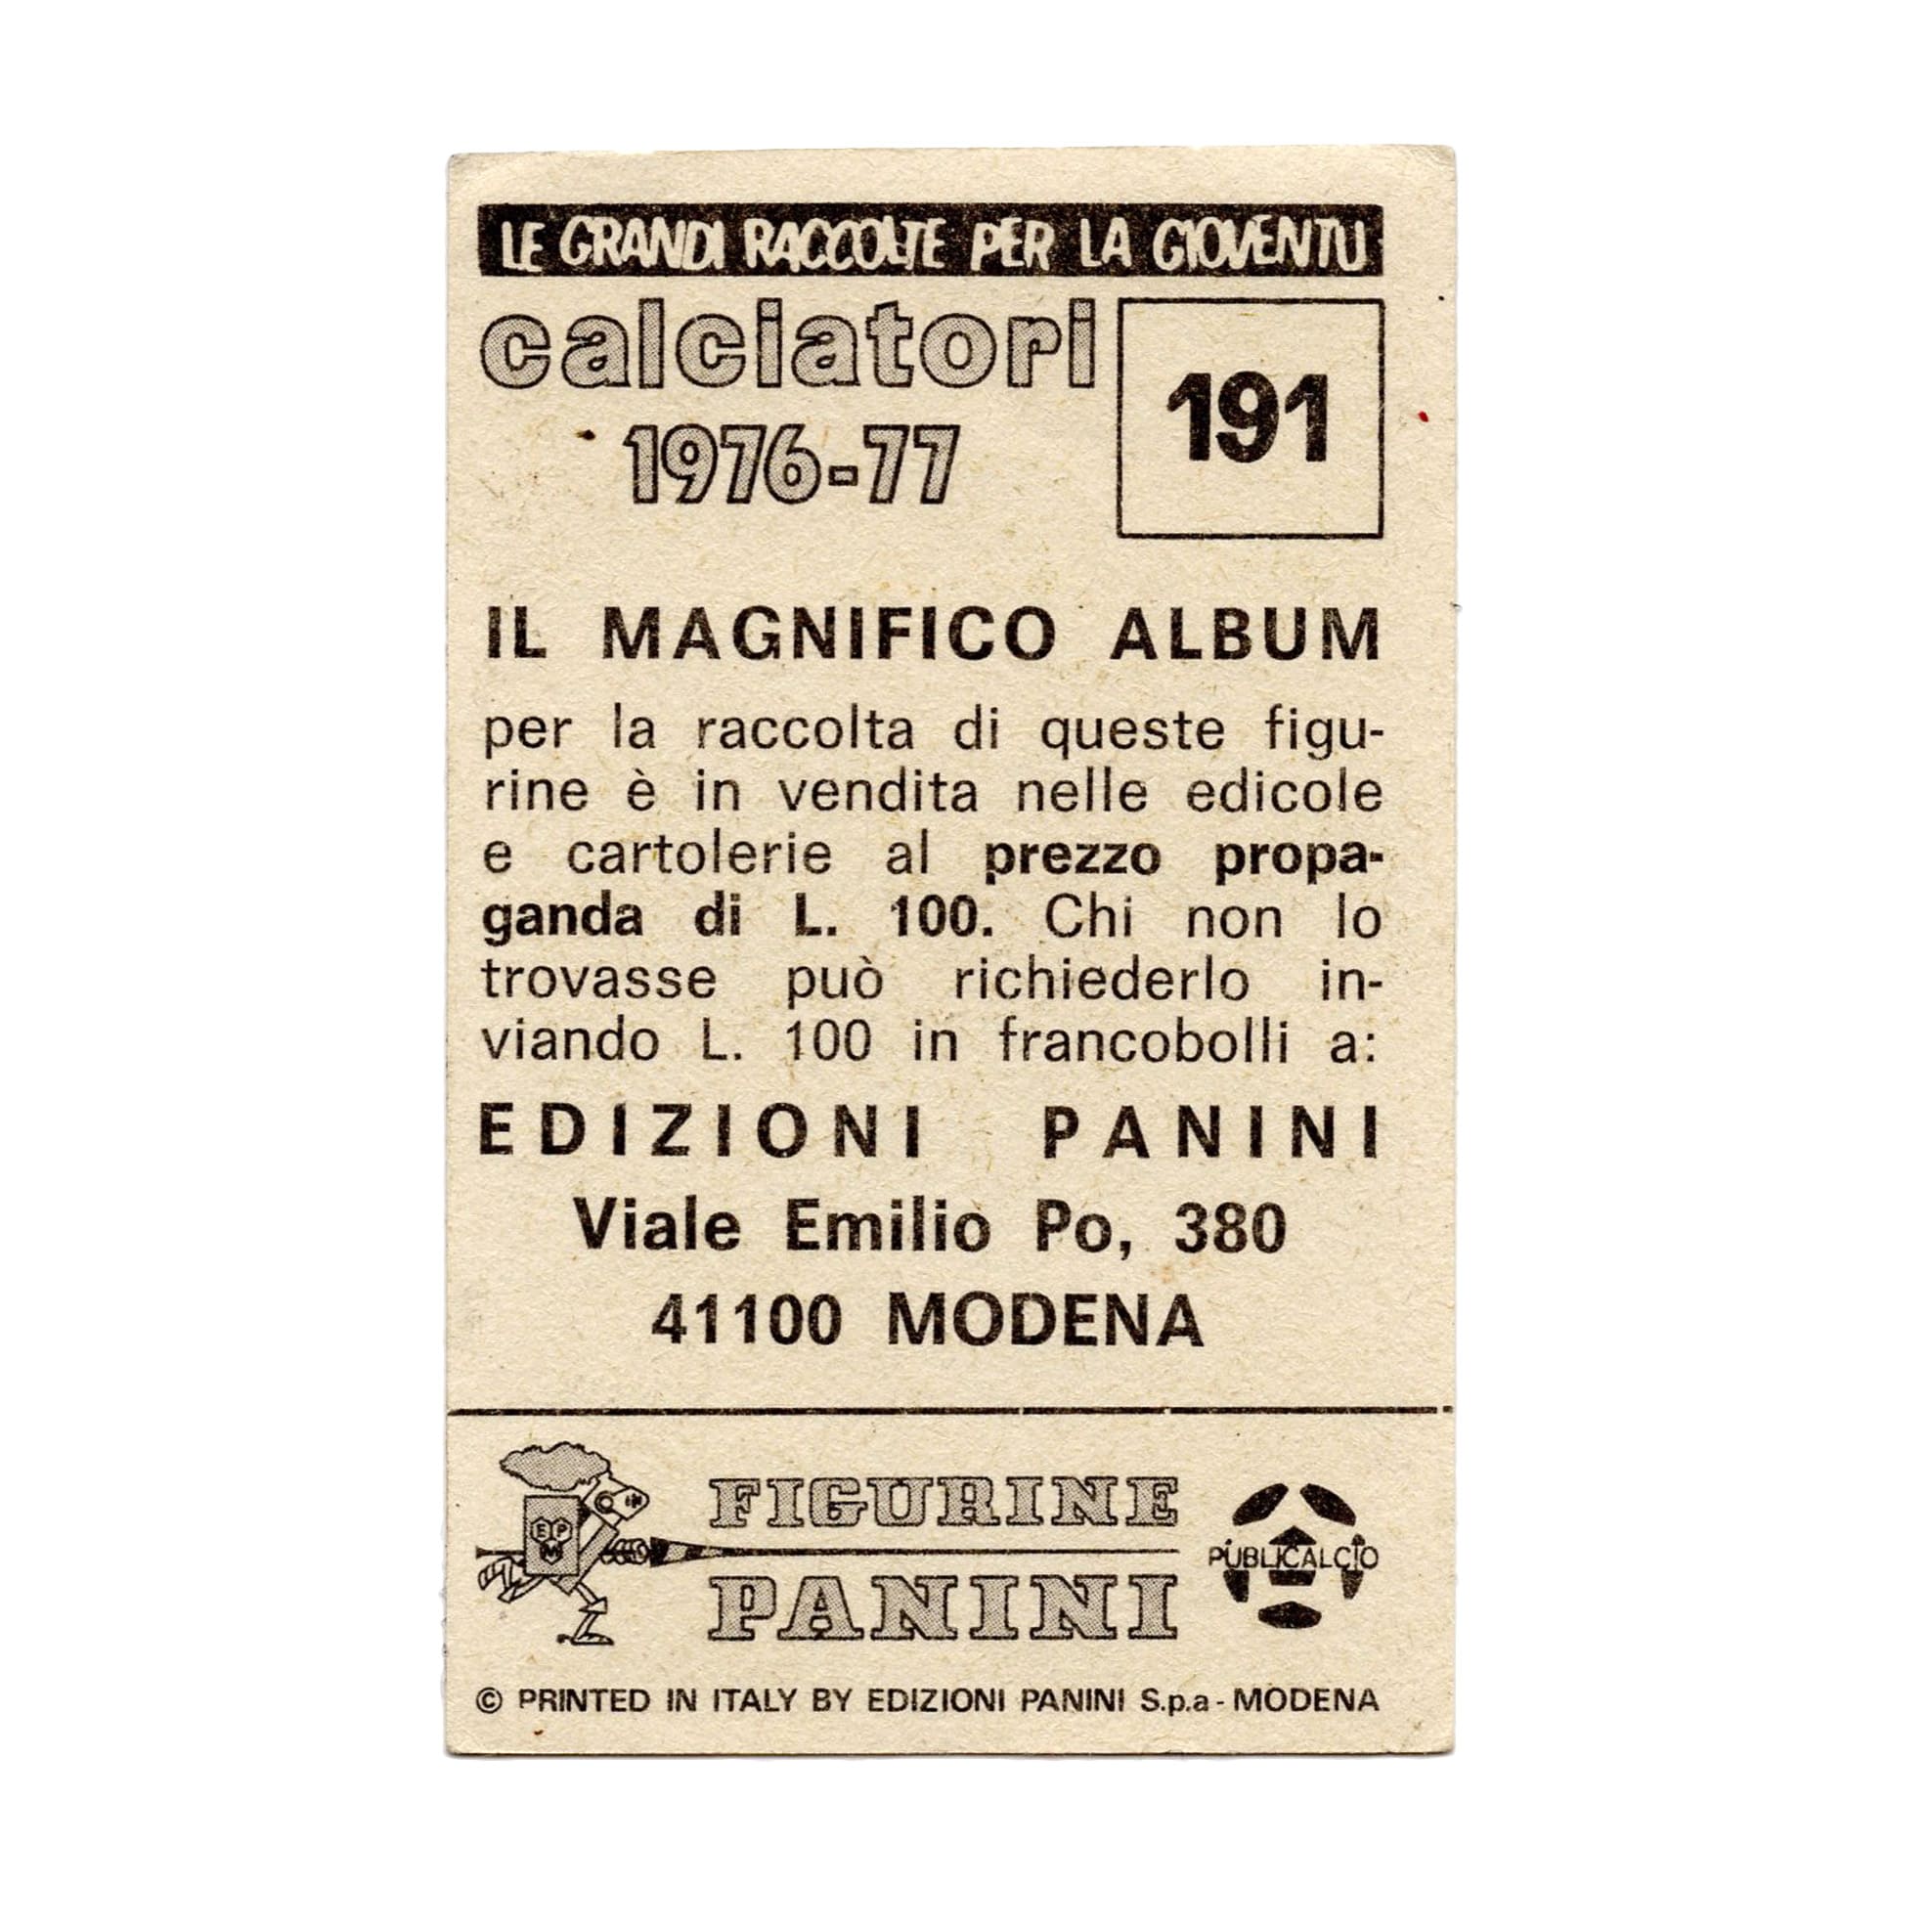 Fabio Capello - Autographed Soccer Sticker Card - Panini F.C. Juventus  1971-1972